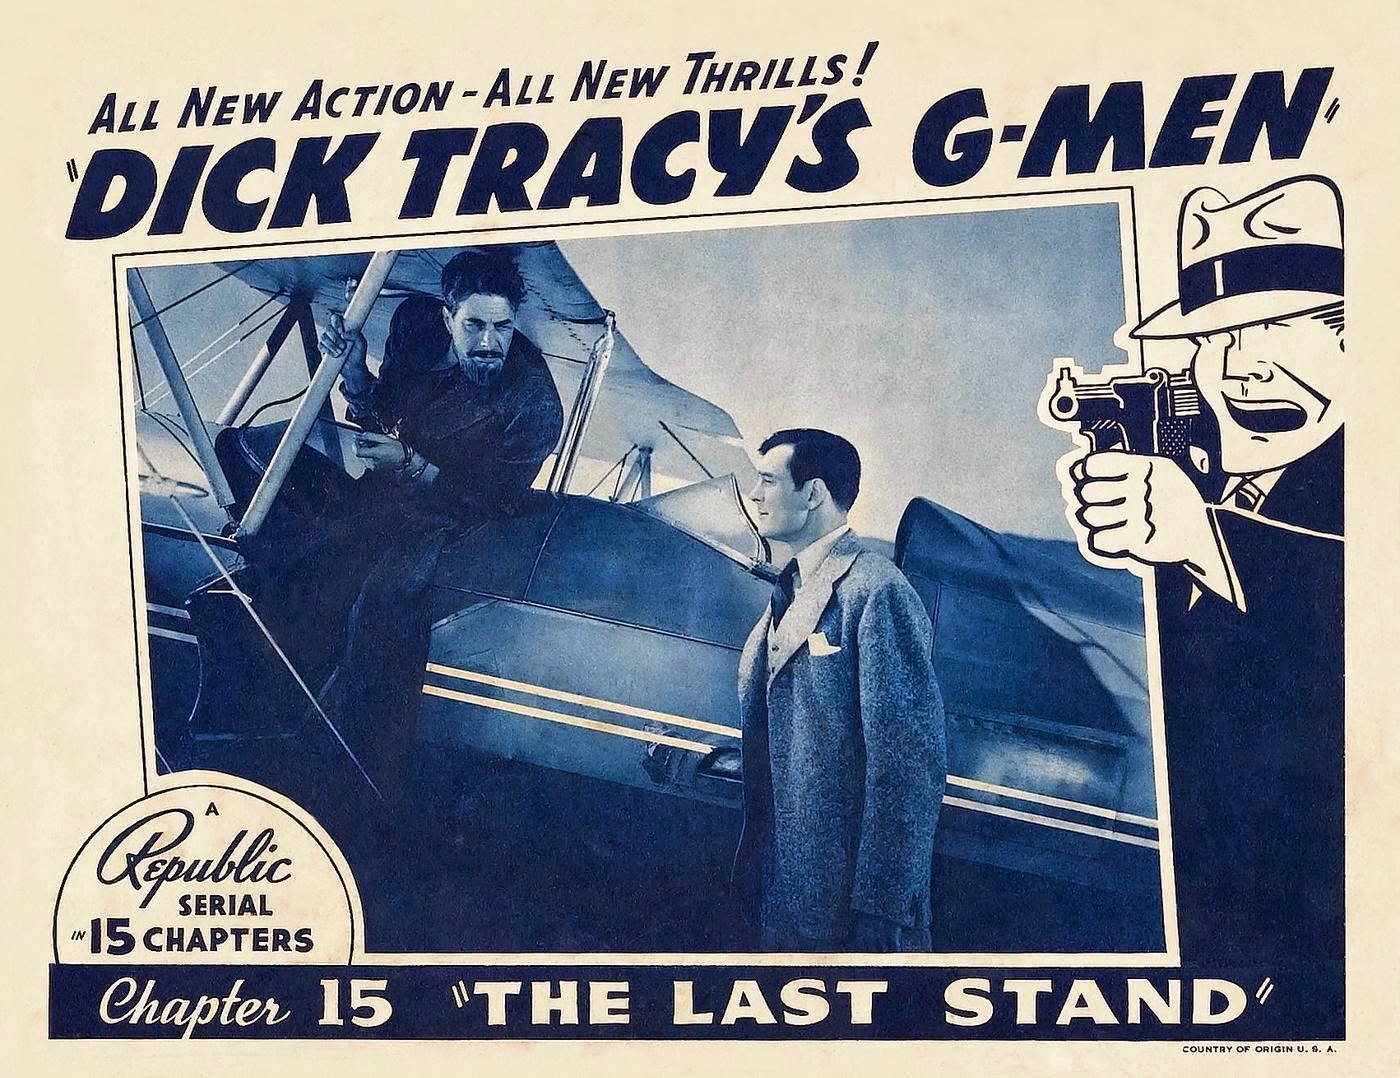 Dick tracy's g-men serial trailer